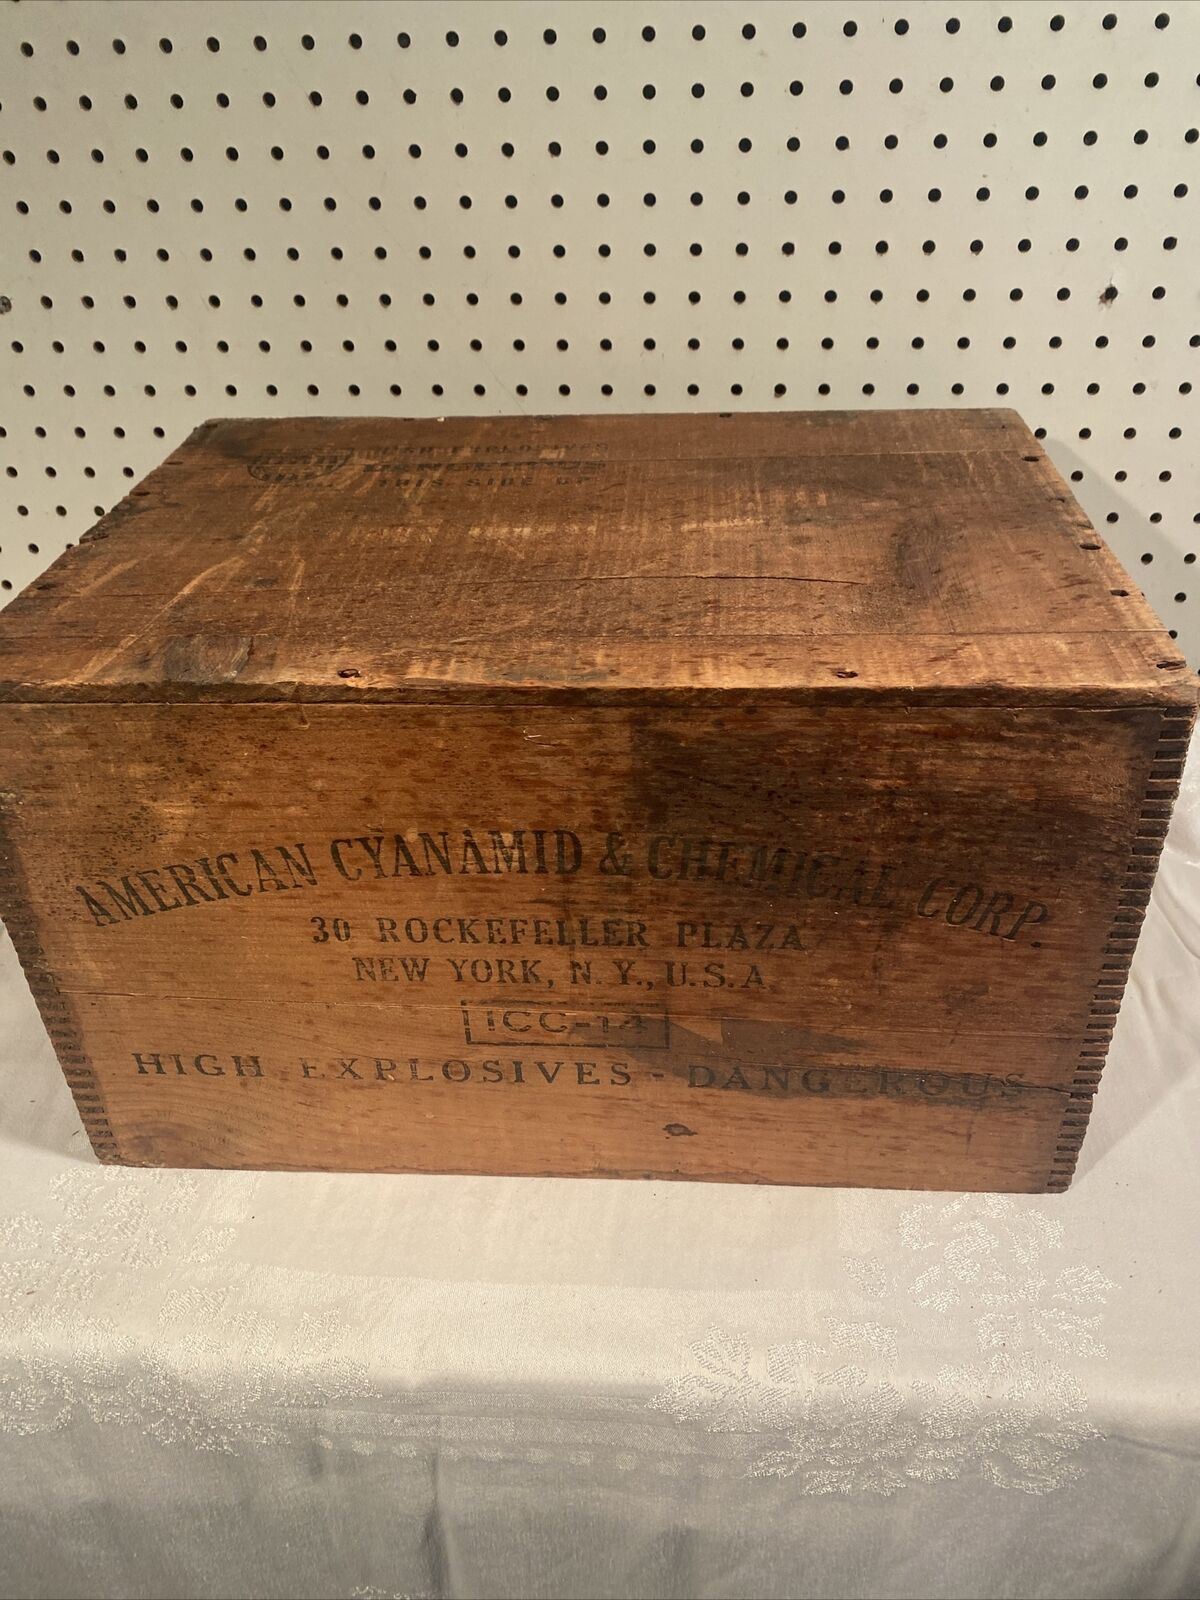 Vintage Wood Dynamite Crate - American Cyanamid Co Rockefeller Plaza NYC Empty